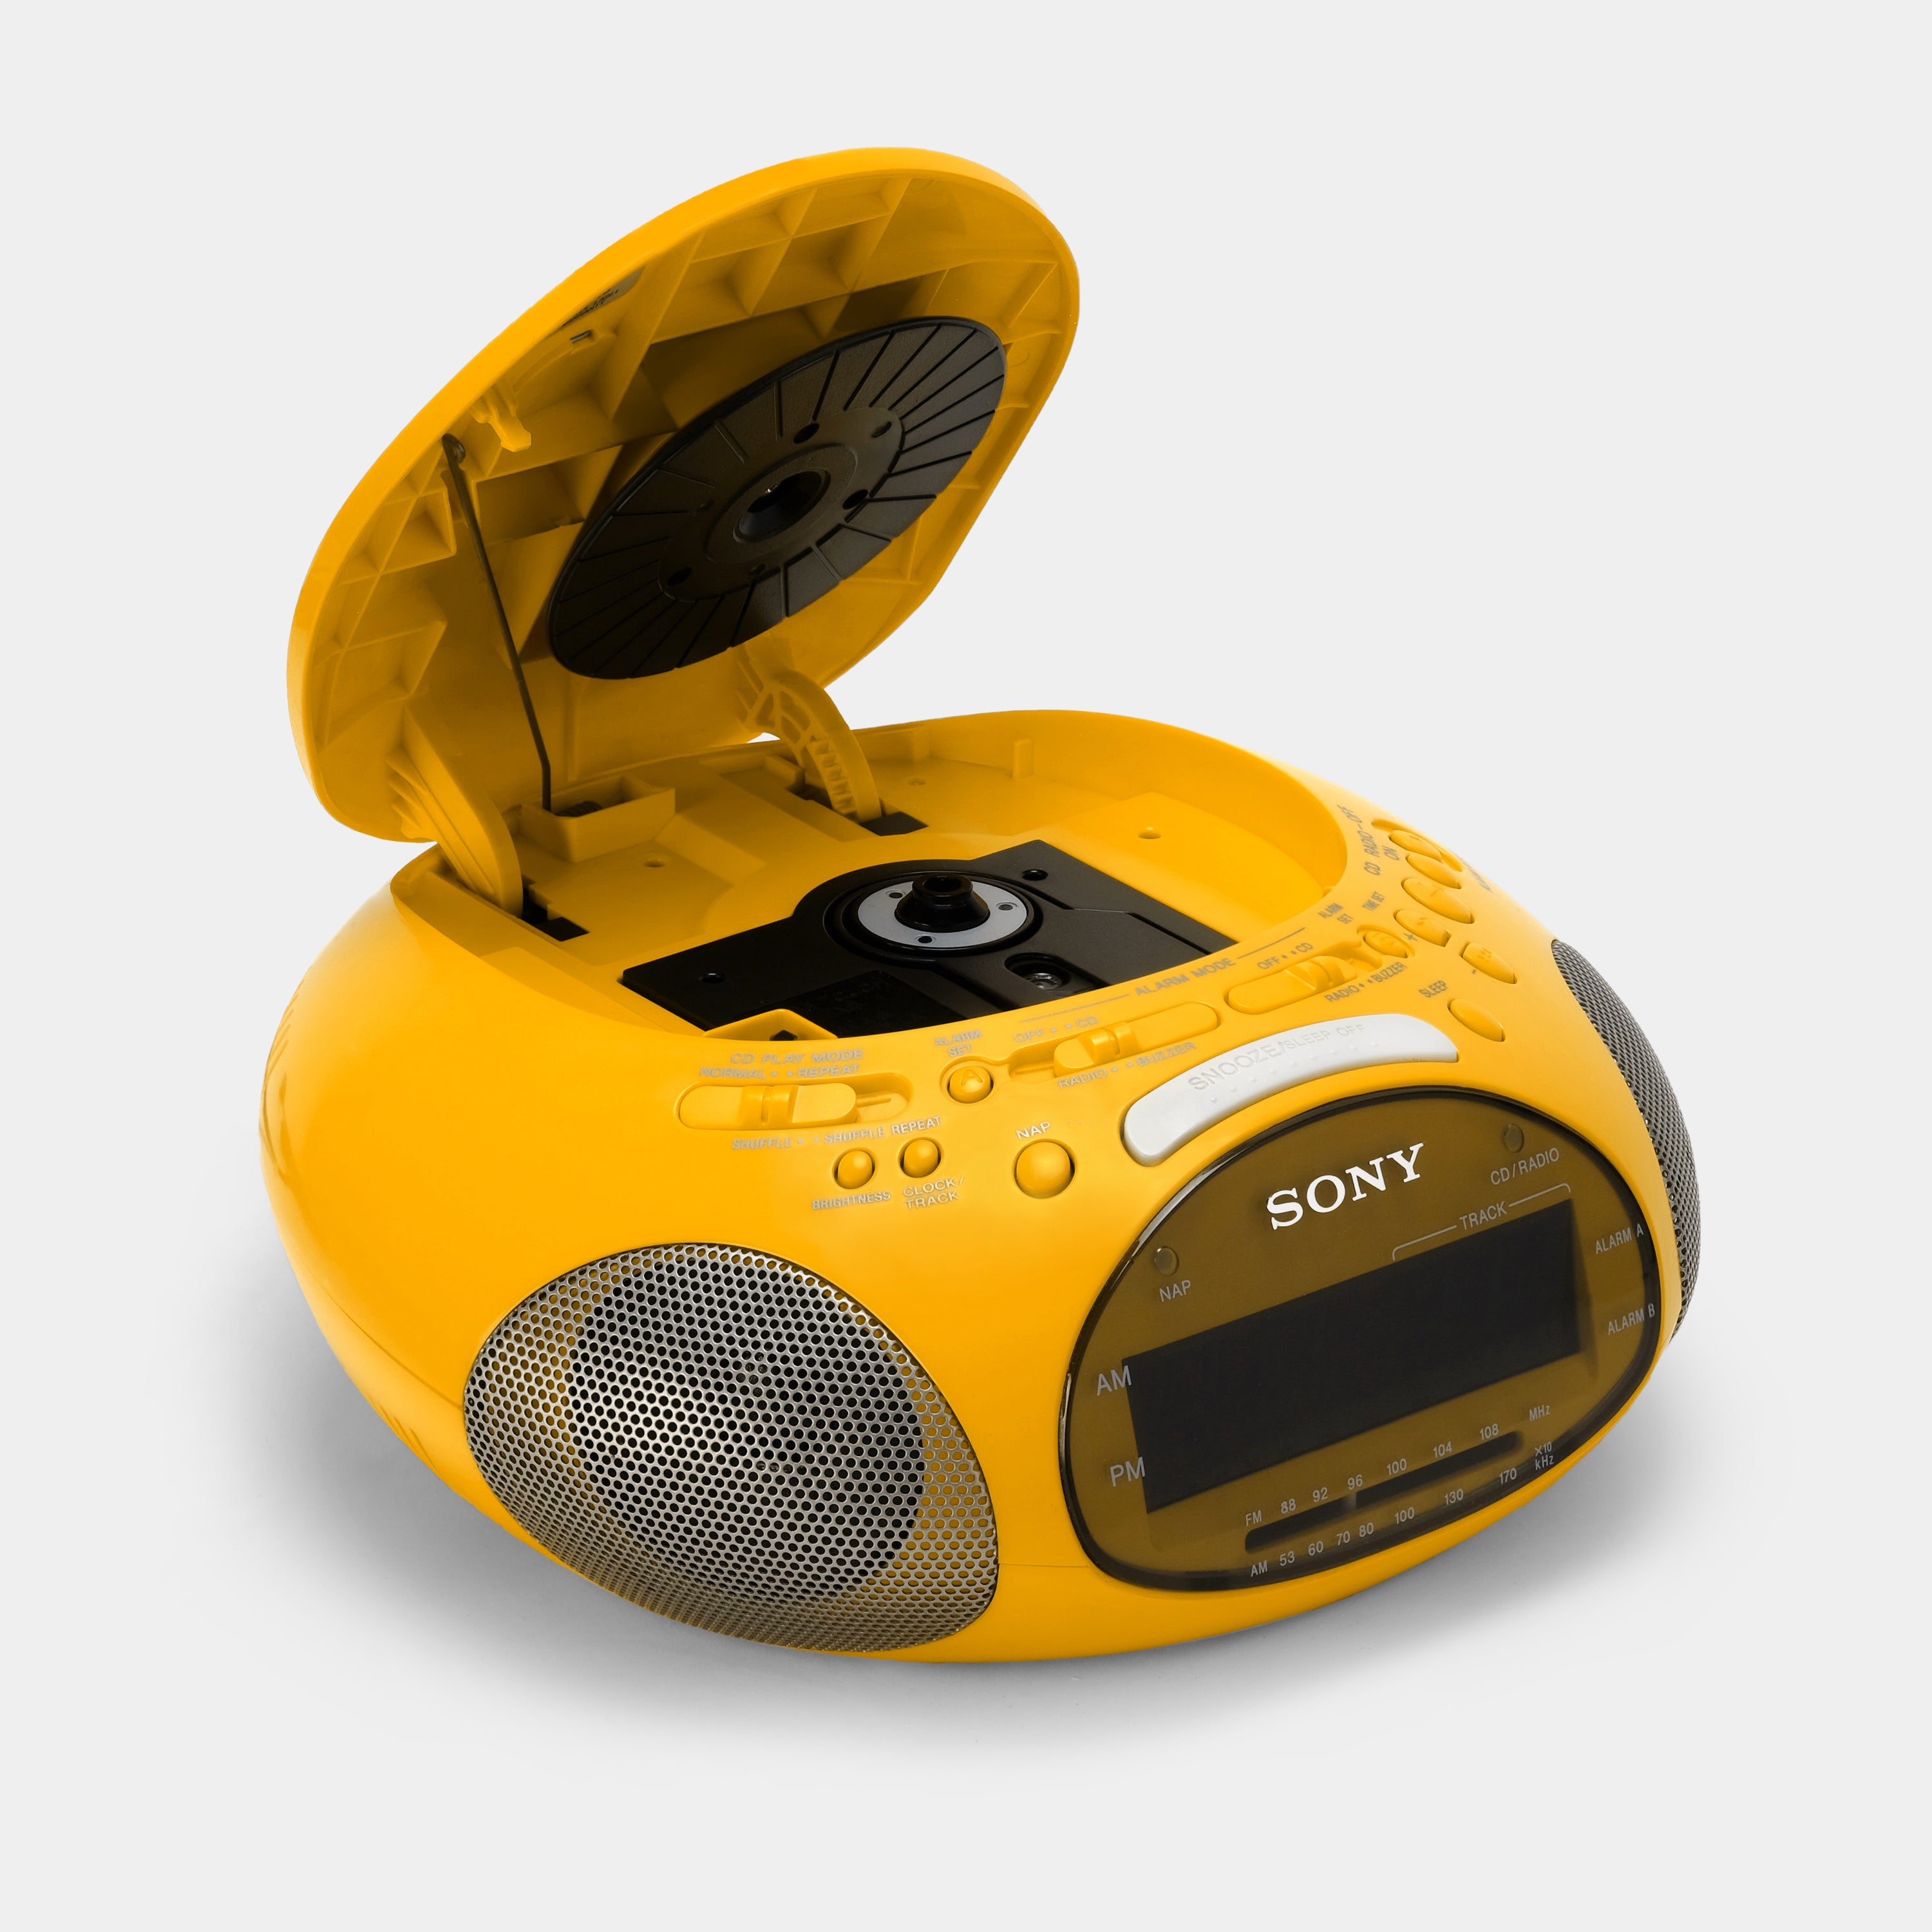 Sony Psyc ICF-CD831 Yellow Dream Machine AM/FM CD Clock Radio